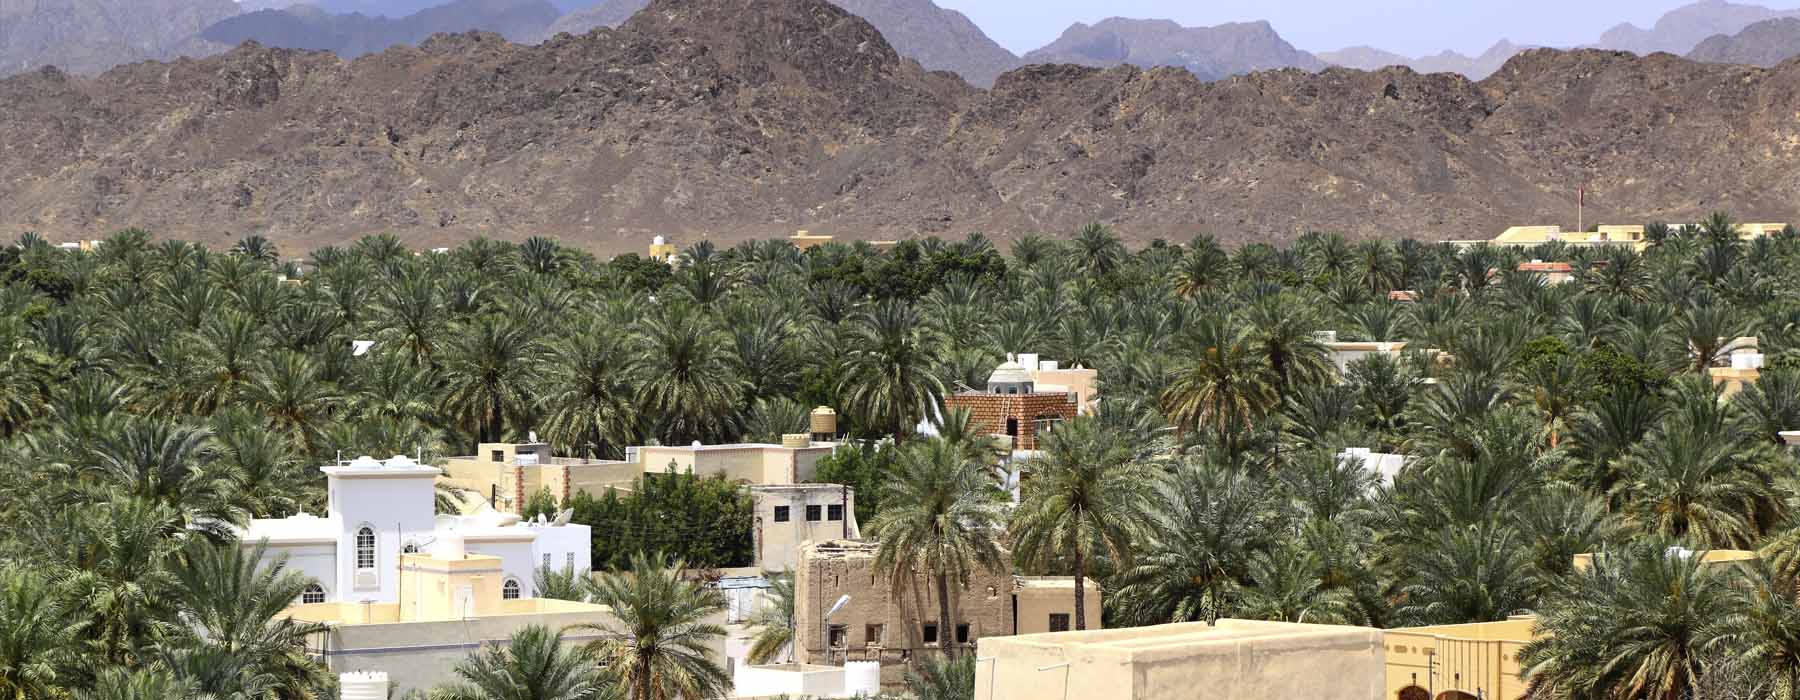 Oman<br class="hidden-md hidden-lg" /> Family Holidays